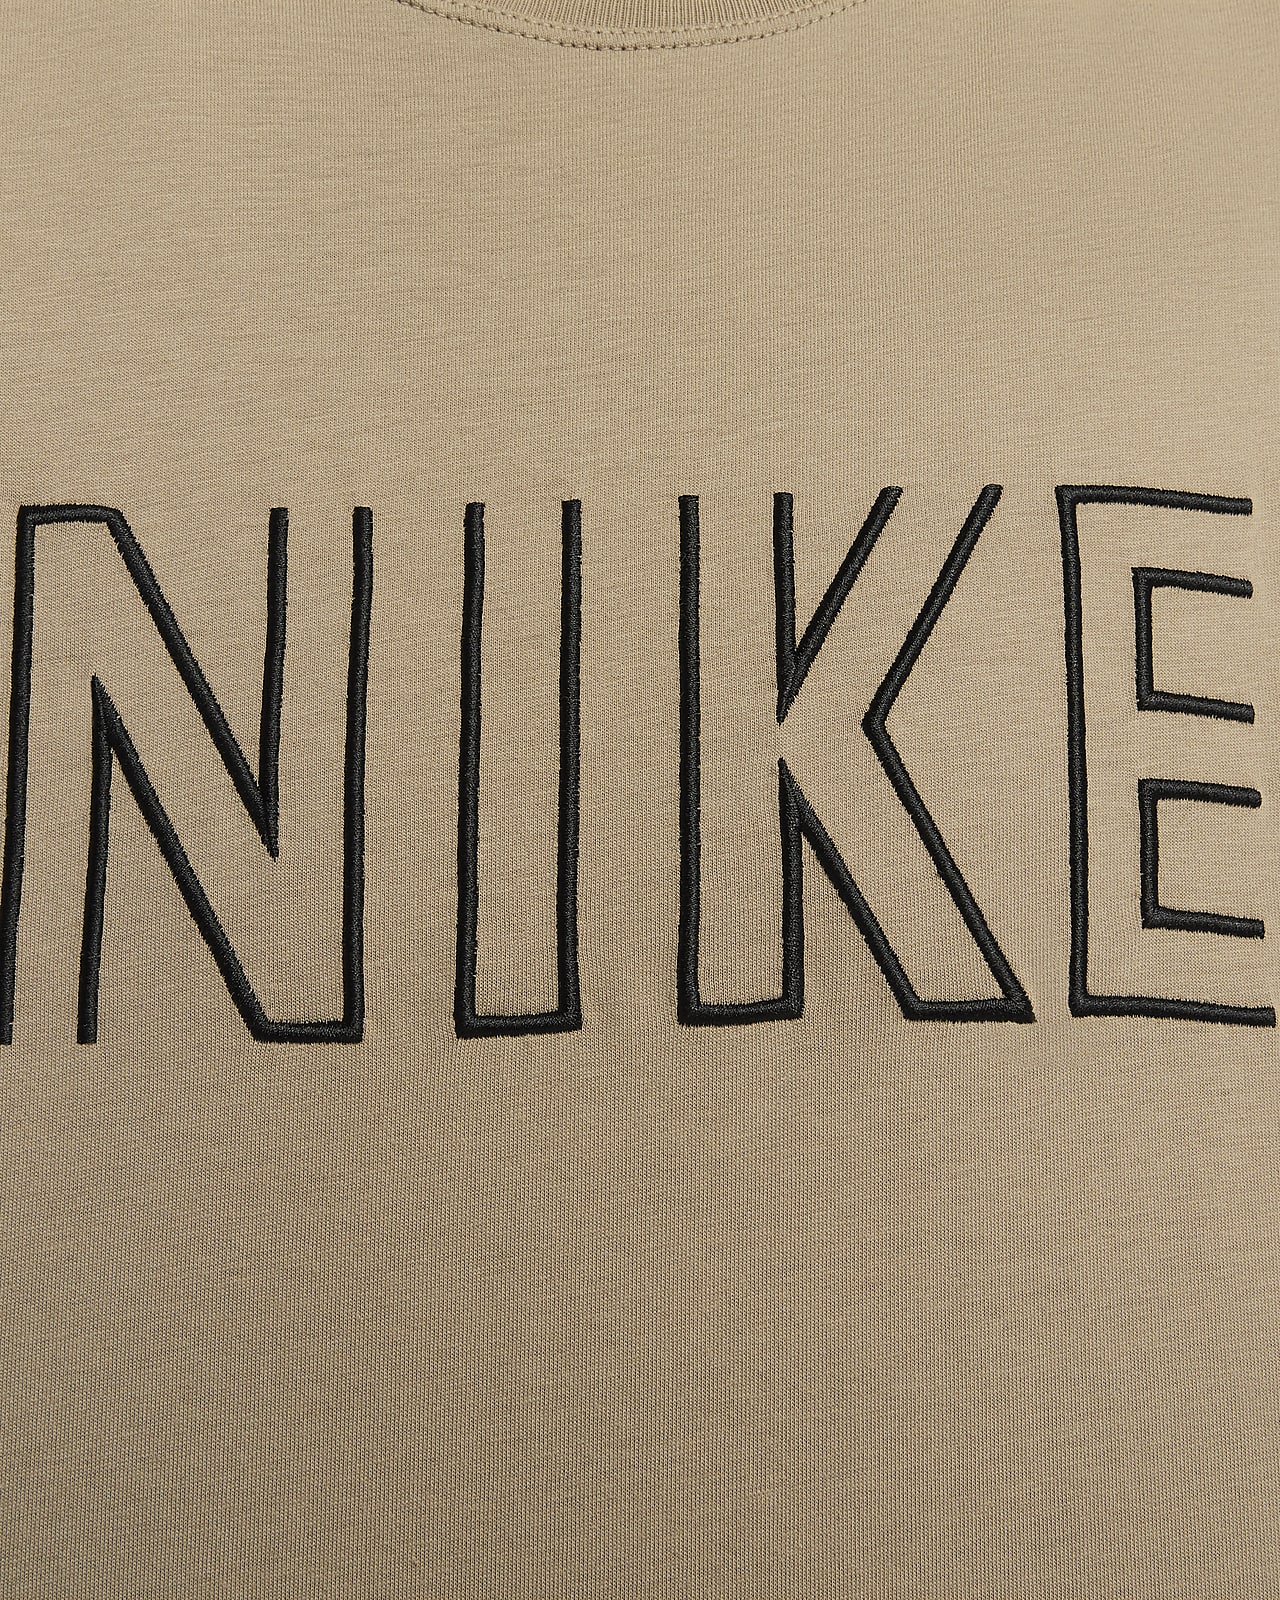 Femmes Sweat-shirts. Nike LU